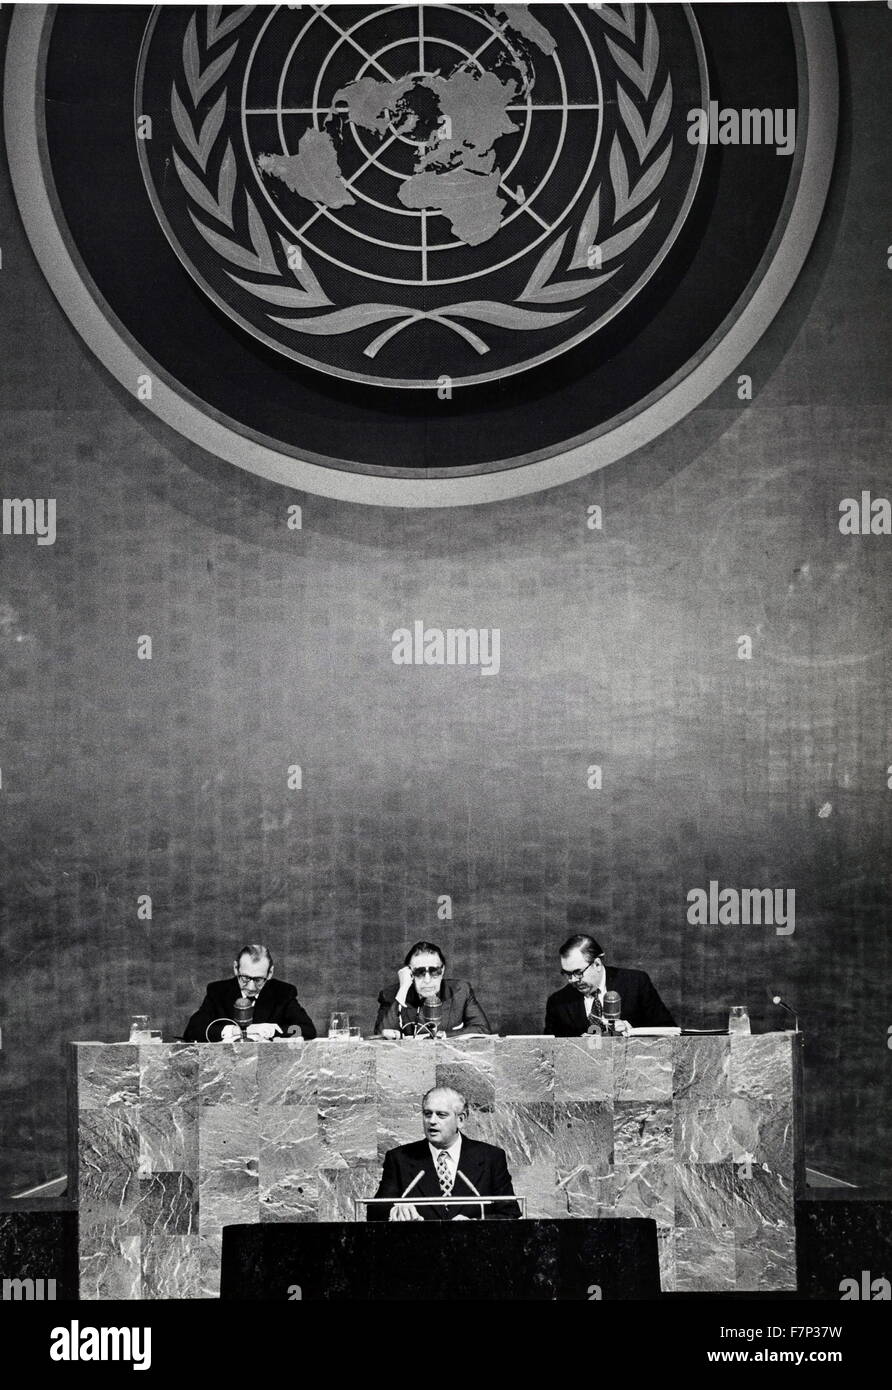 Fotografía del Primer Ministro de Nueva Zelandia Norman Kirk (1923-1974) tratar la Asamblea de la ONU. Fecha 1973 Foto de stock